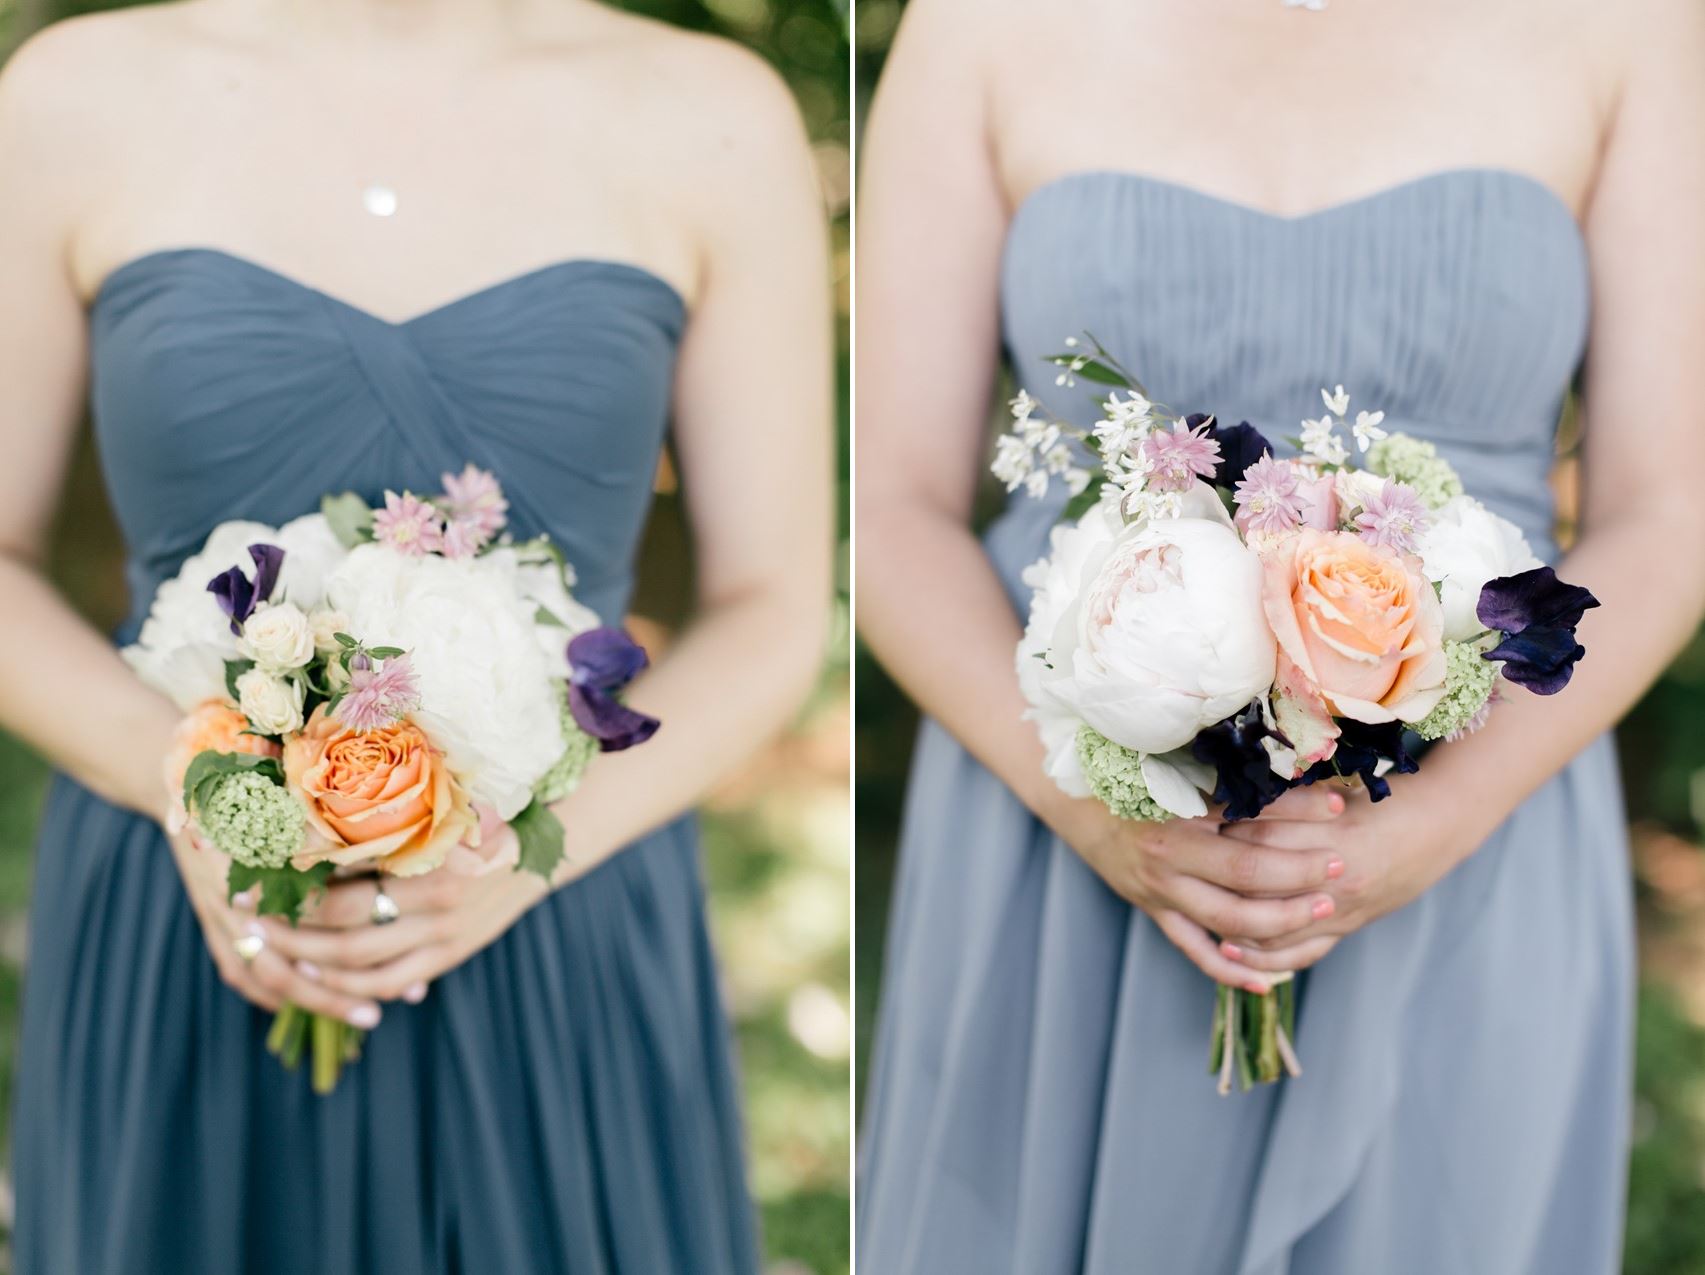 Romantic Bridesmaids Bouquets - An Enchanting Early Summer Garden Wedding